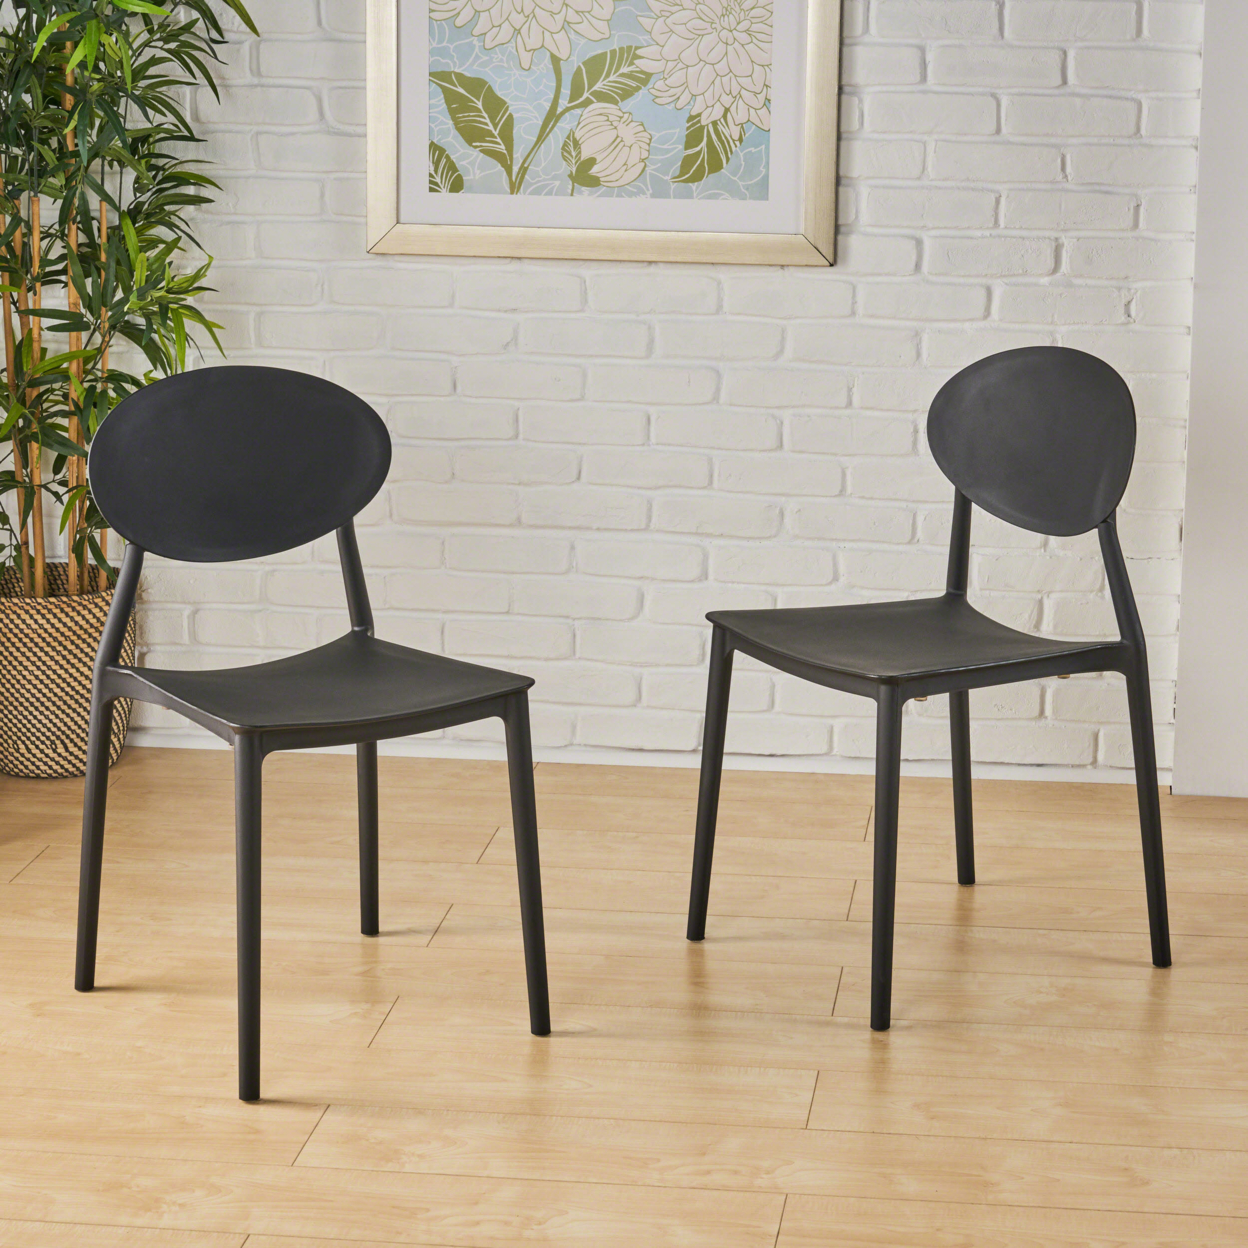 Ali Indoor Plastic Chair (Set Of 2) - White